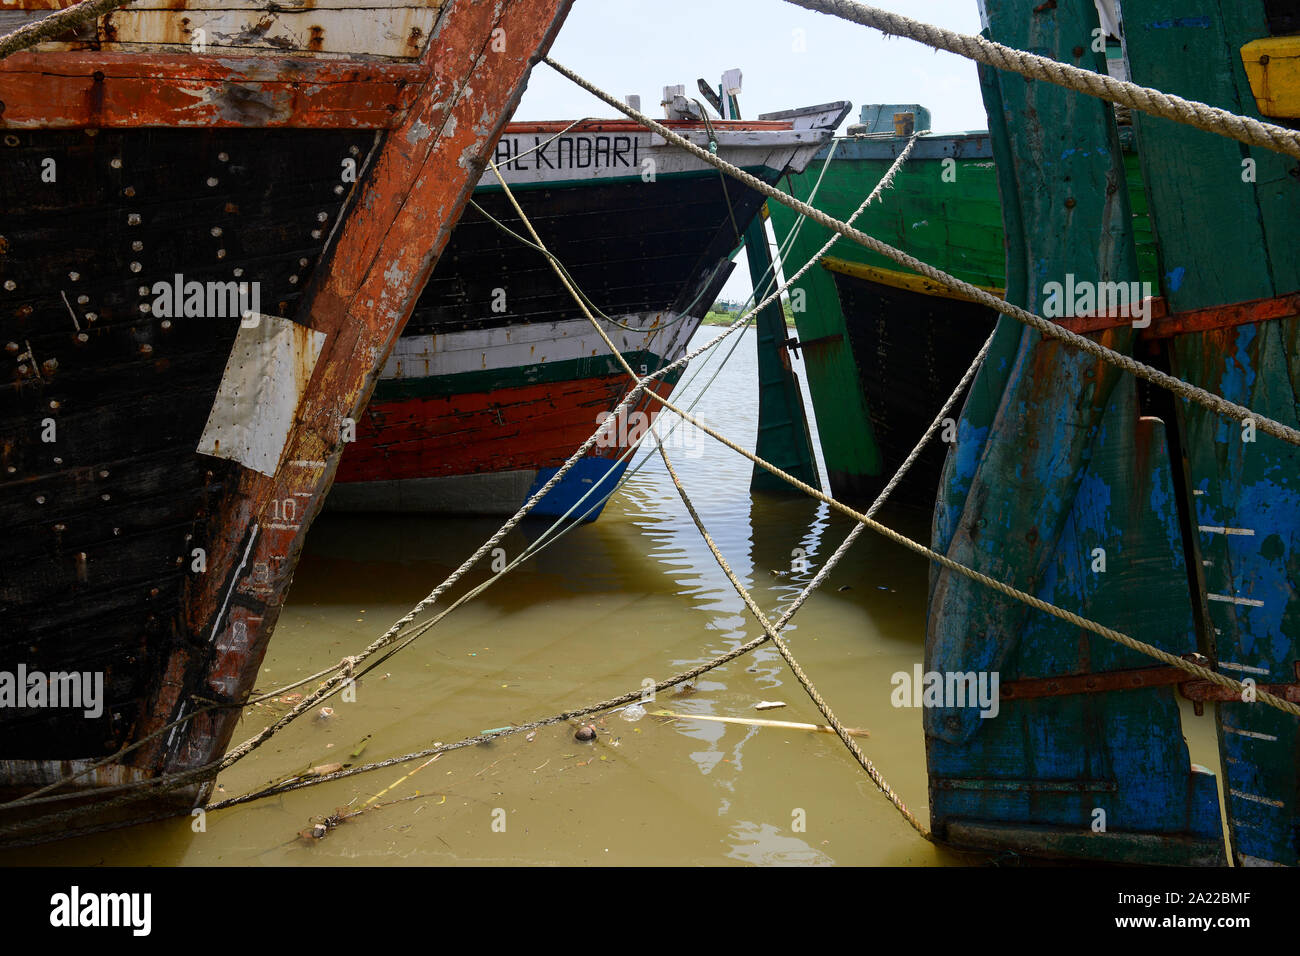 INDIA, Karnataka, Mangaluru, former name Mangalore, wooden cargo boats in old port tied together with ropes at quai Stock Photo